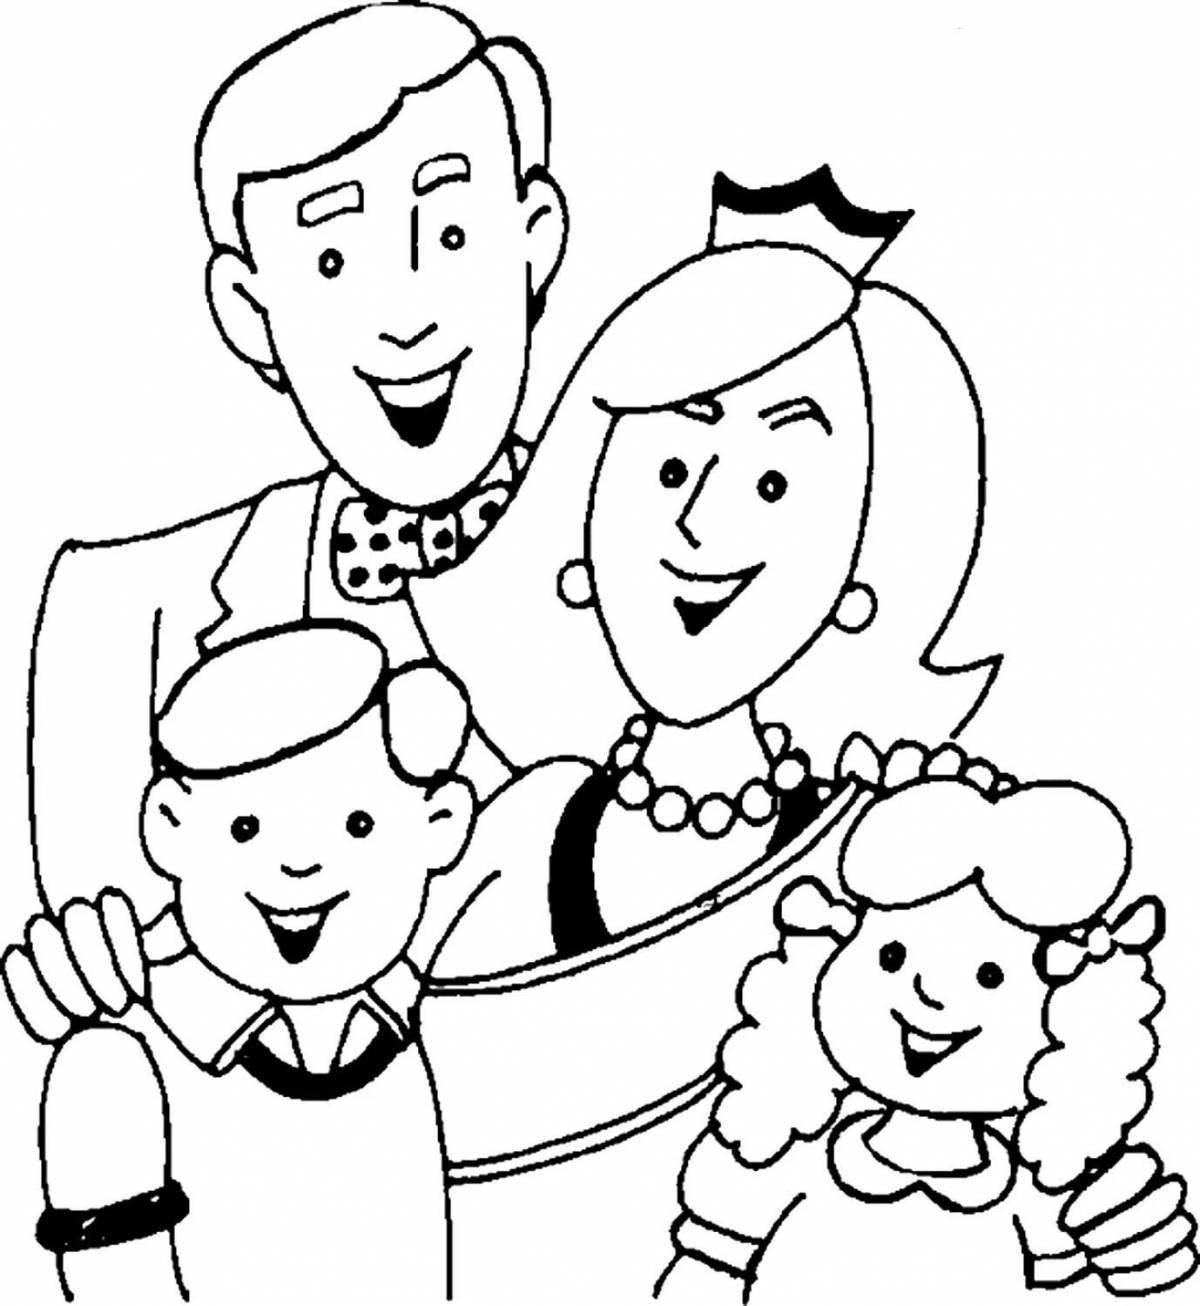 Compassionate family coloring book